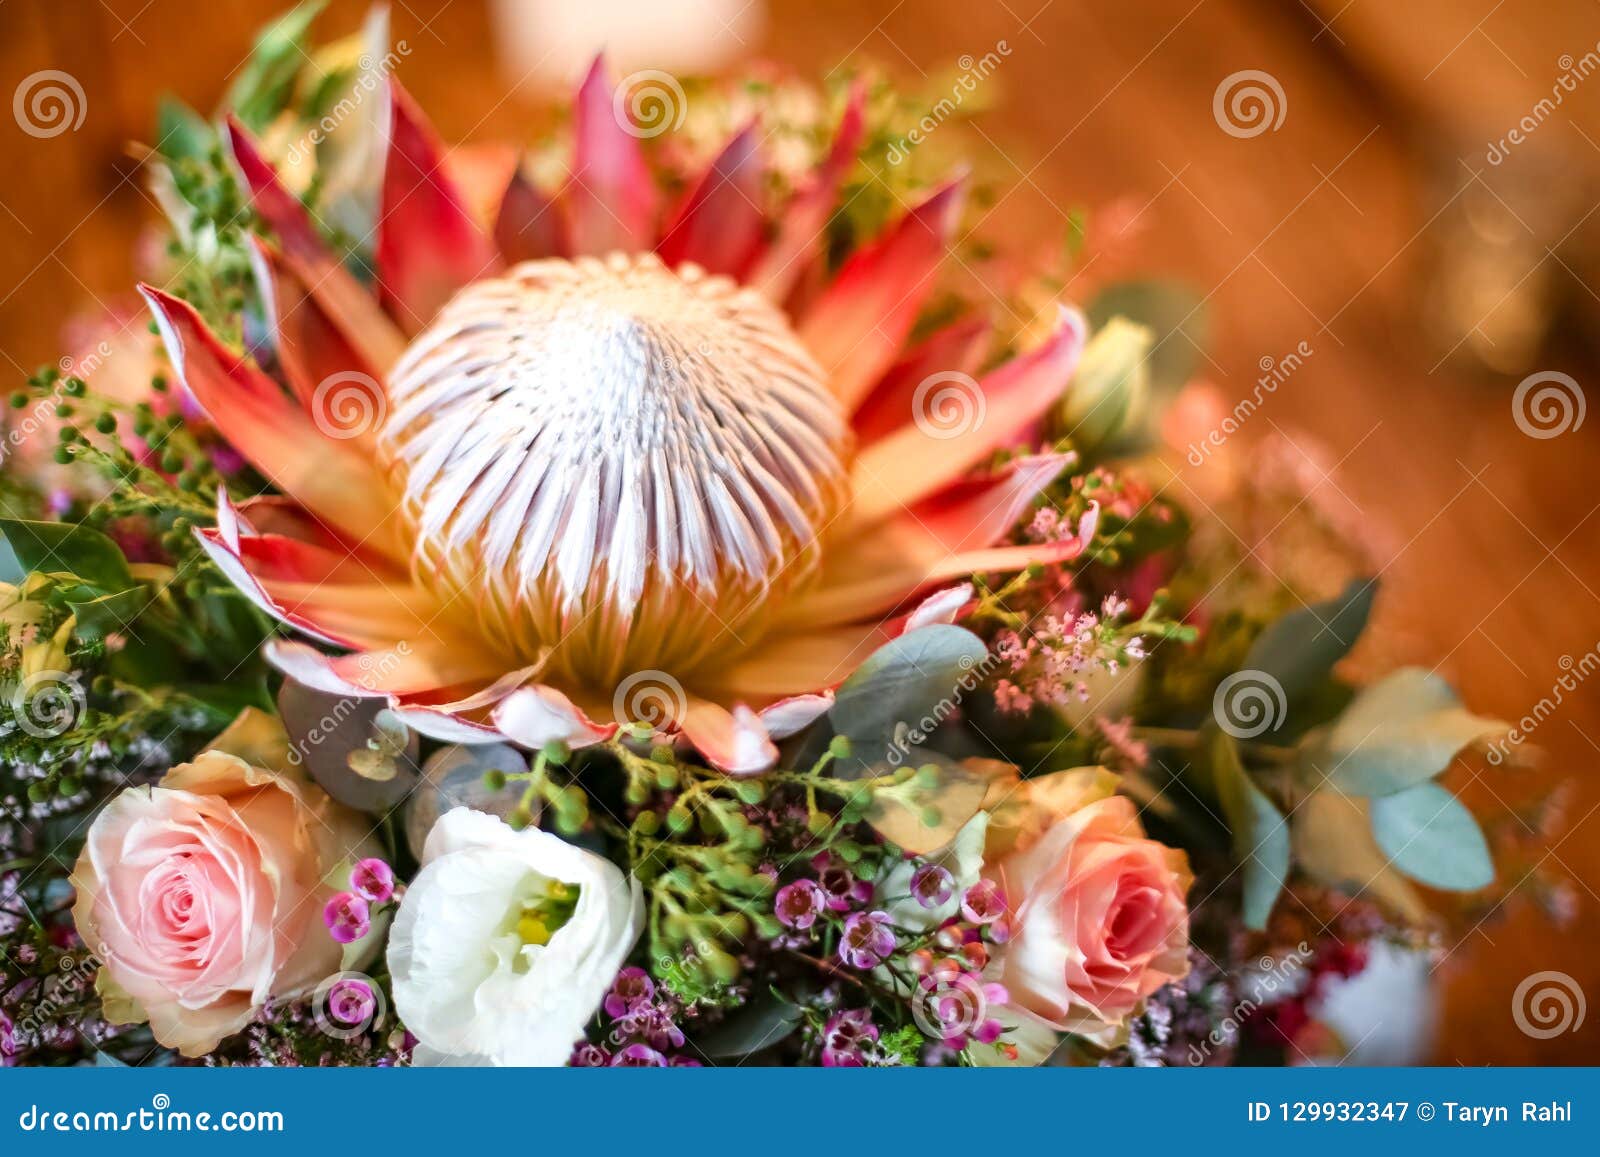 King Protea Table Decor For Wedding Bridal Table. Stock Image